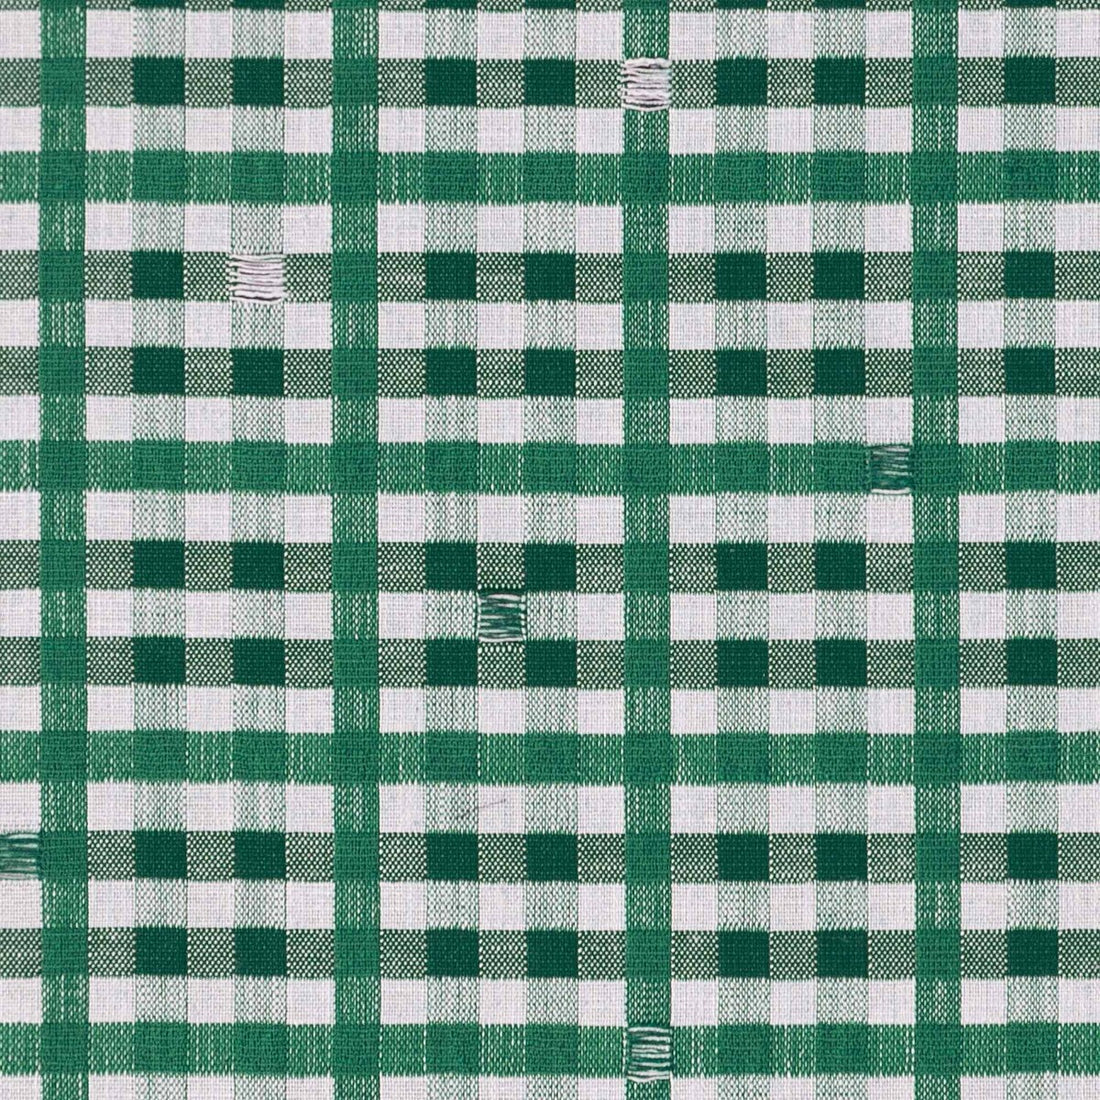 Trajano fabric in verde oscuro color - pattern LCT1130.007.0 - by Gaston y Daniela in the Lorenzo Castillo IX Hesperia collection